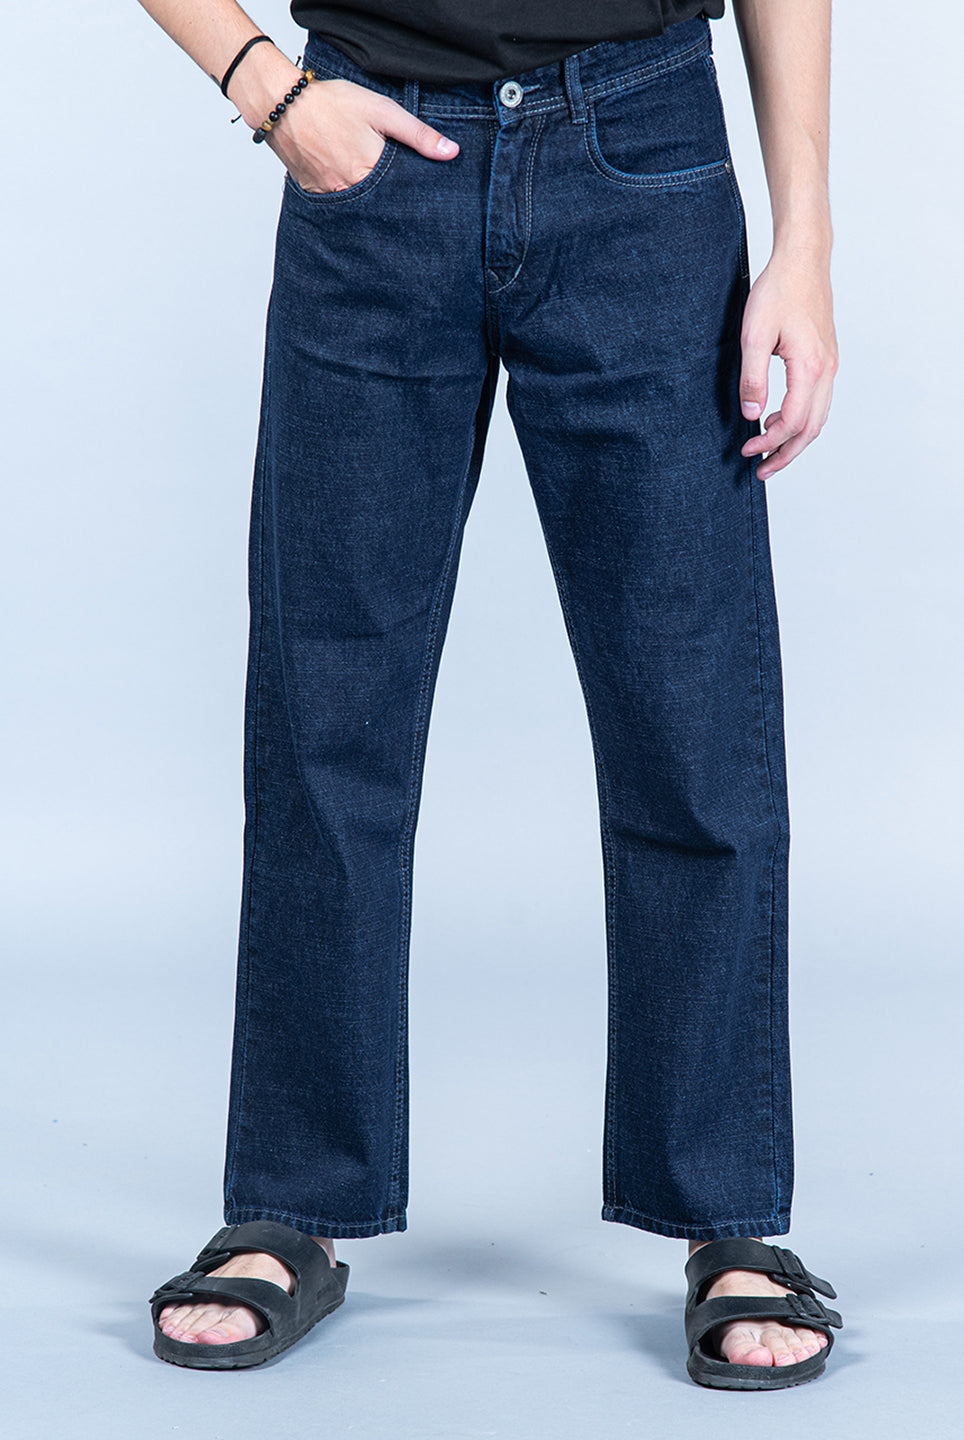 navy blue straight fit denim jeans